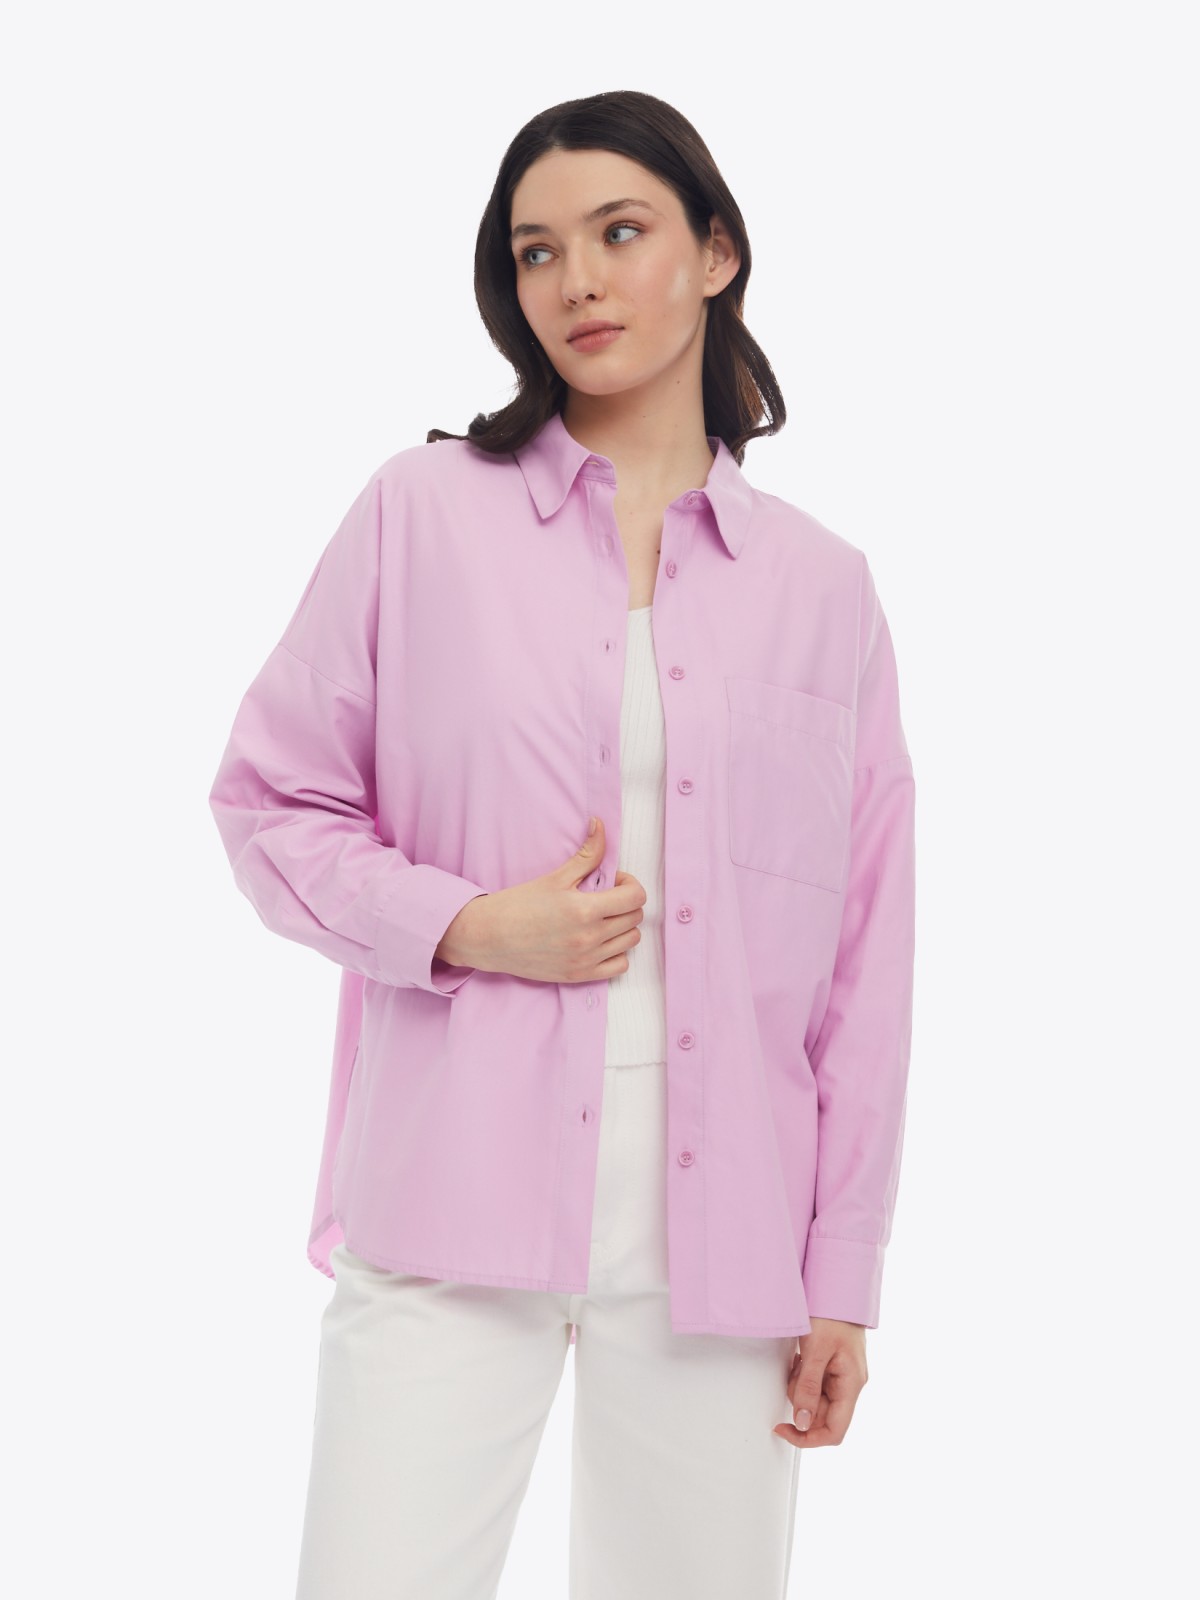 Рубашка оверсайз силуэта с надписью на спине zolla 02413118Y093, цвет розовый, размер XS